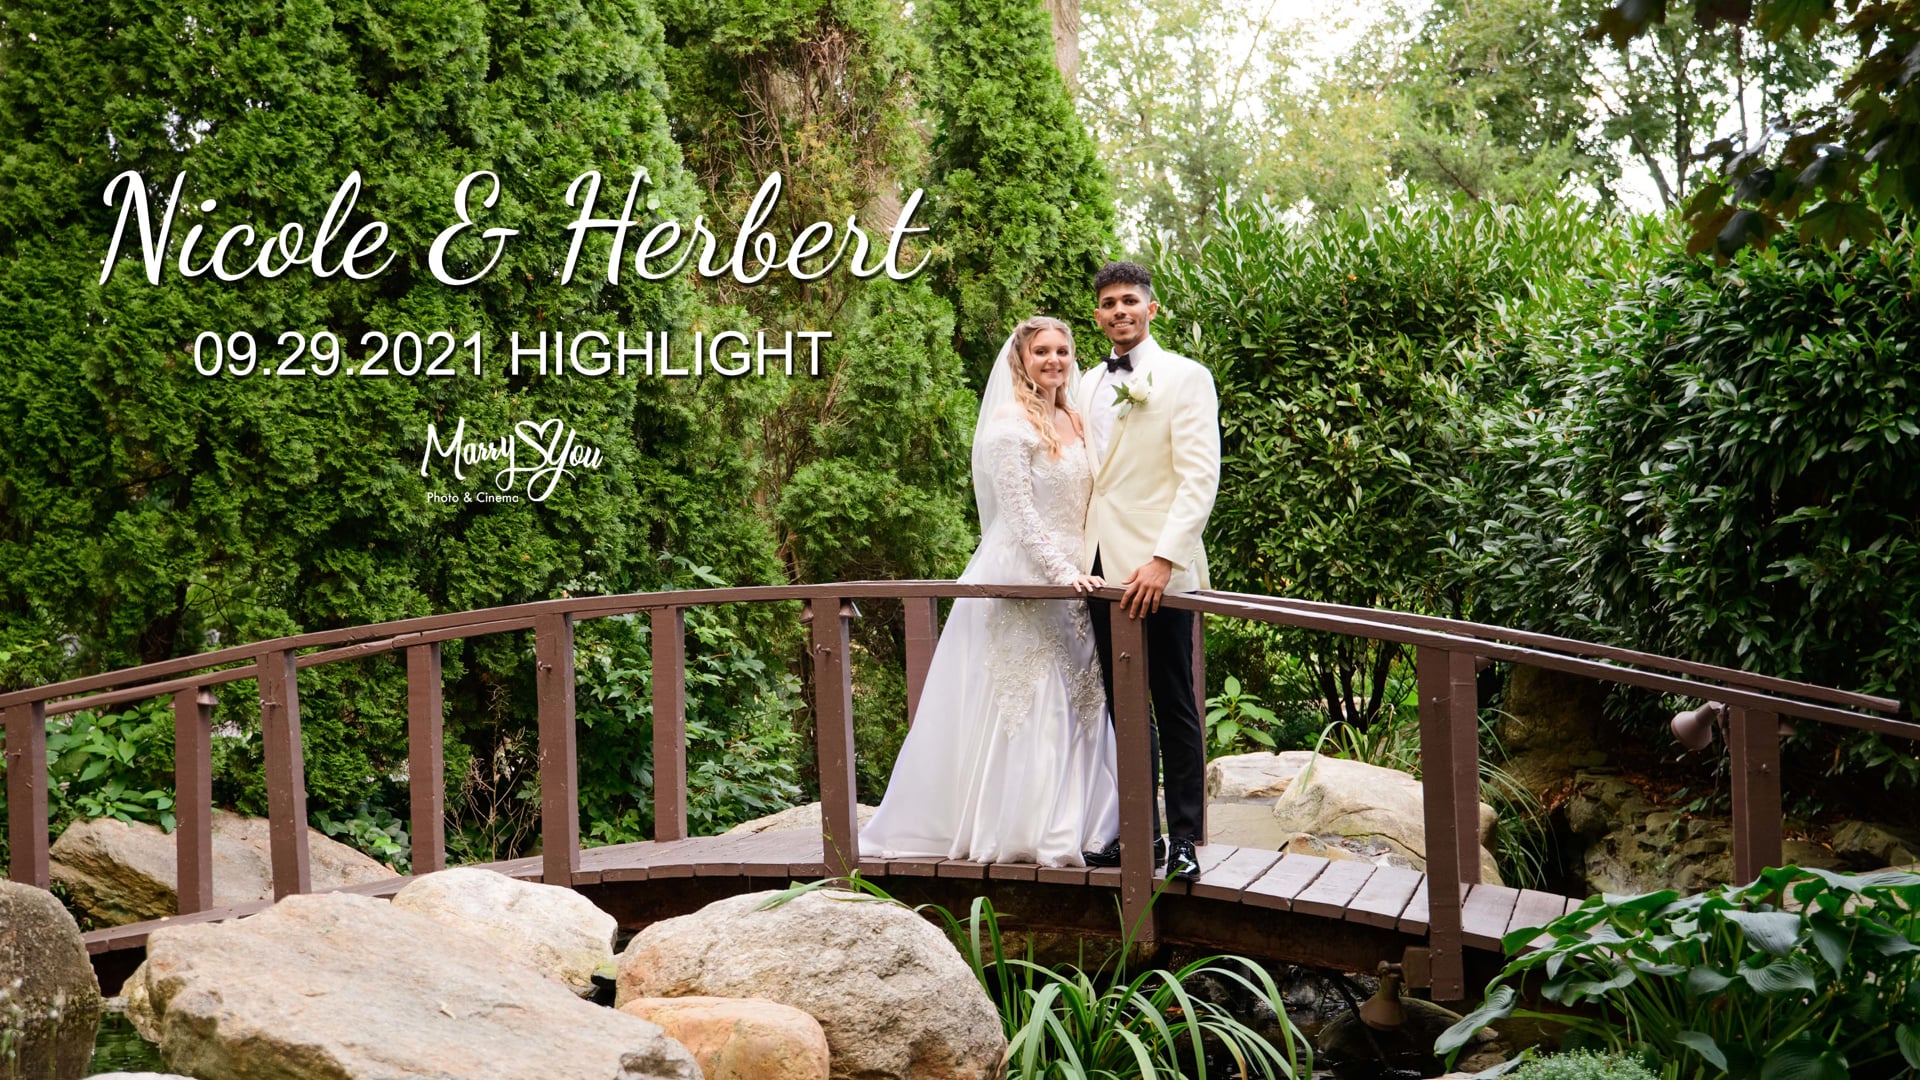 09.29.2021 Nicole & Herbert wedding highlight video